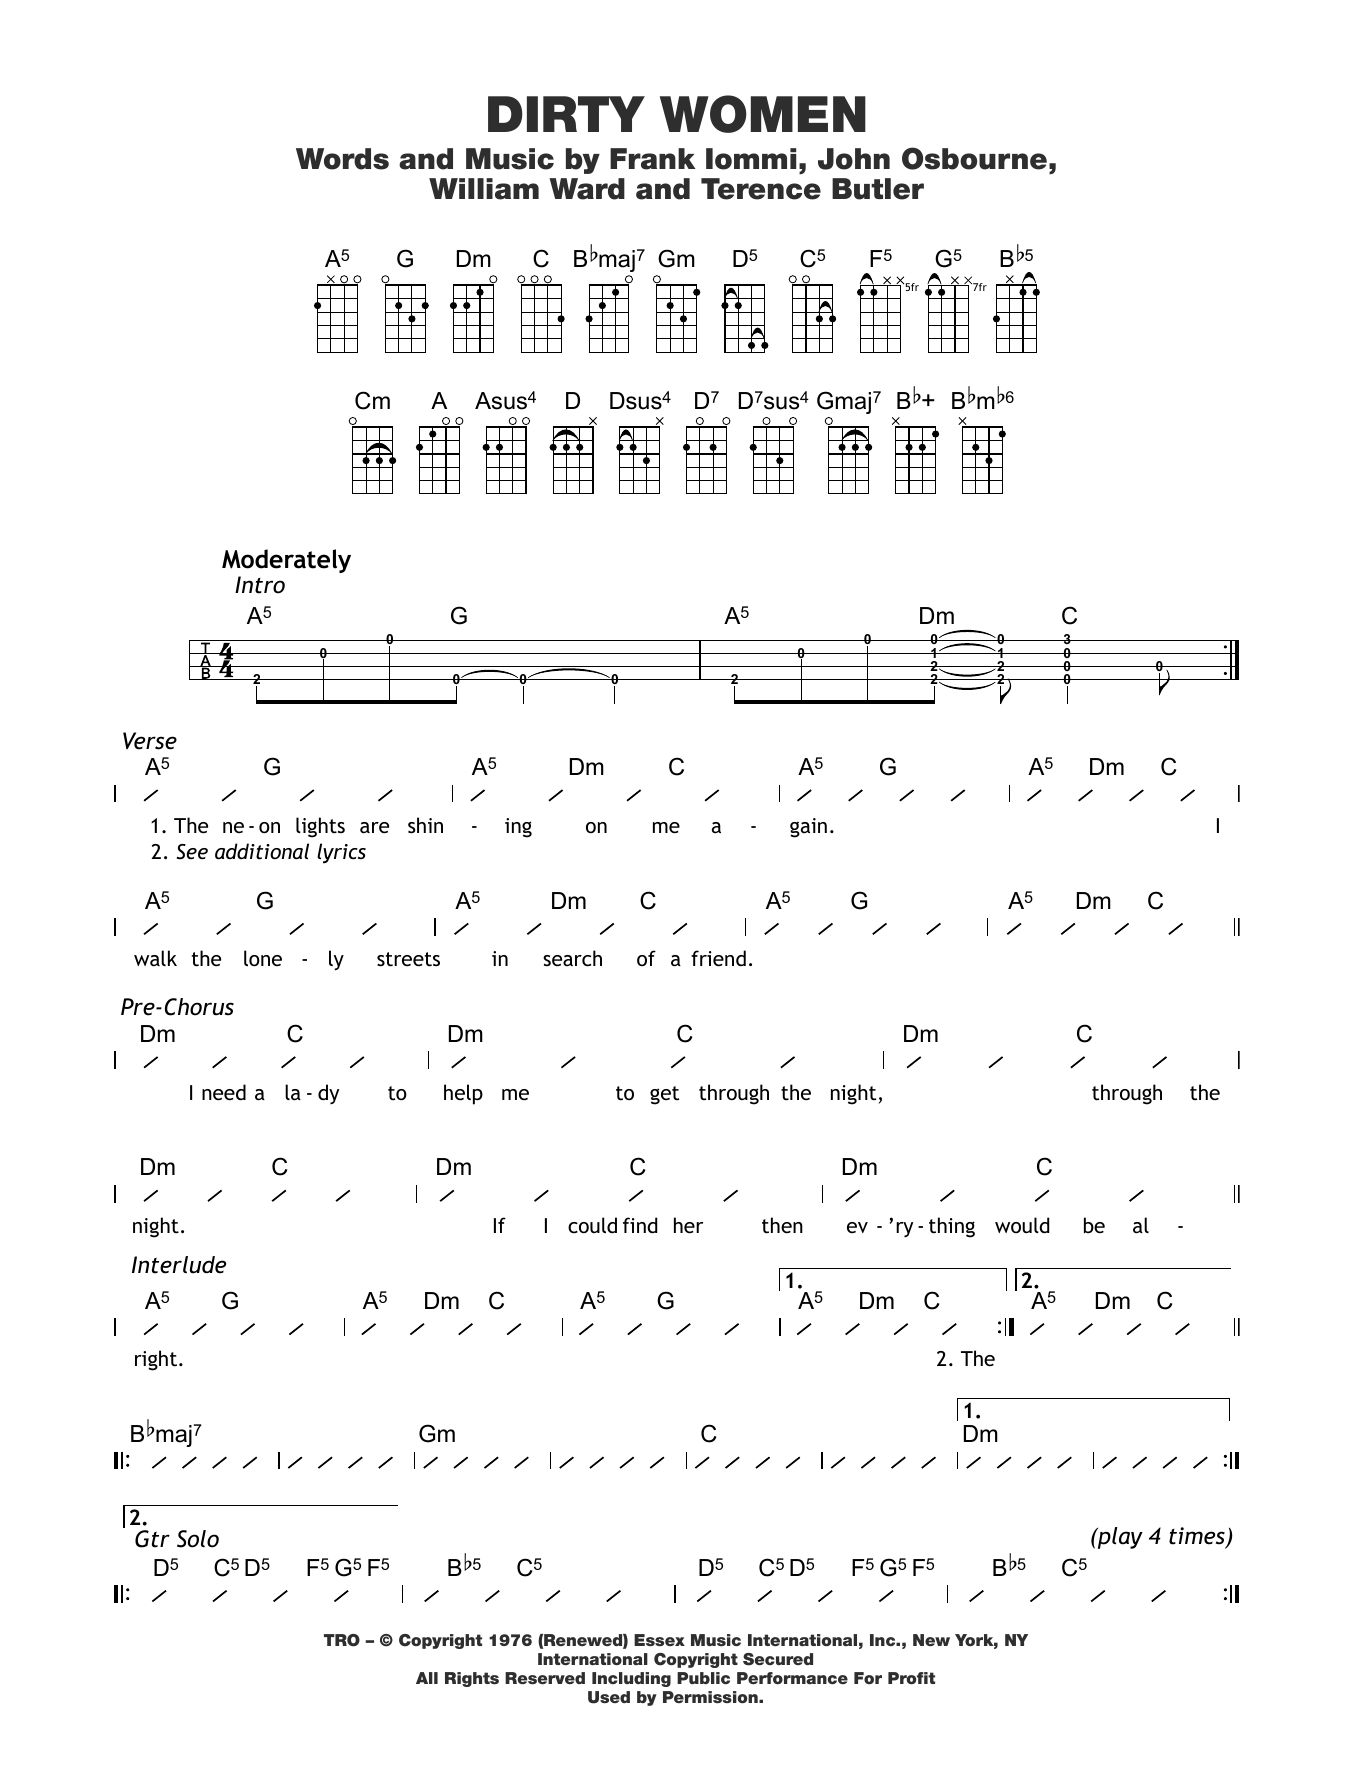 Black Sabbath Dirty Women Sheet Music Notes & Chords for Ukulele with strumming patterns - Download or Print PDF